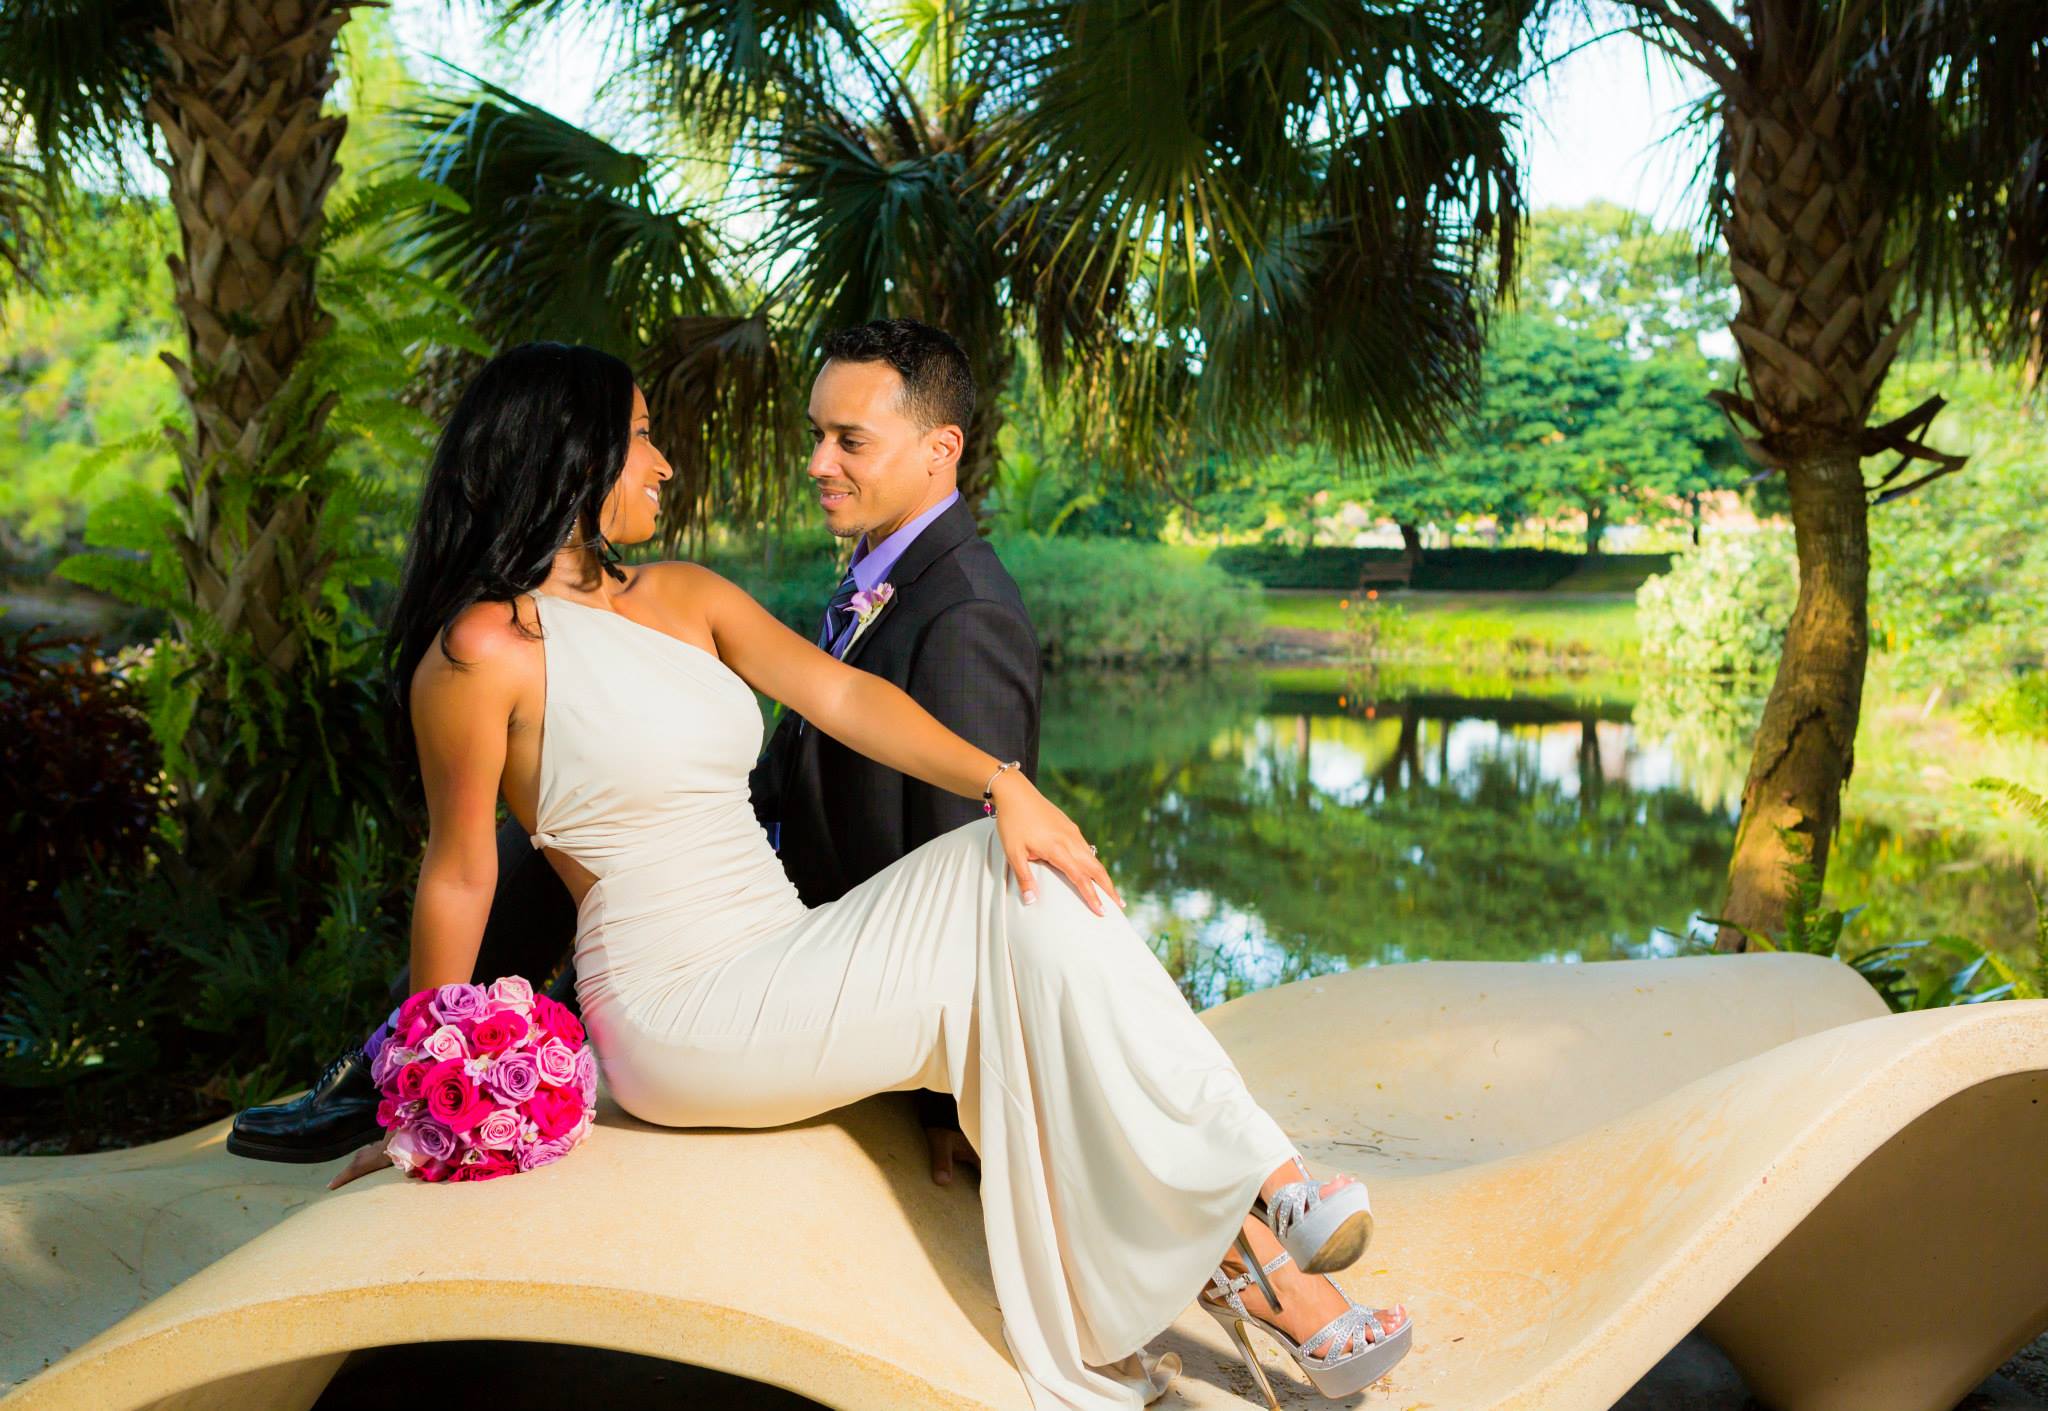 Need a palm Beach Wedding Photographer for your Palm Beach County Wedding